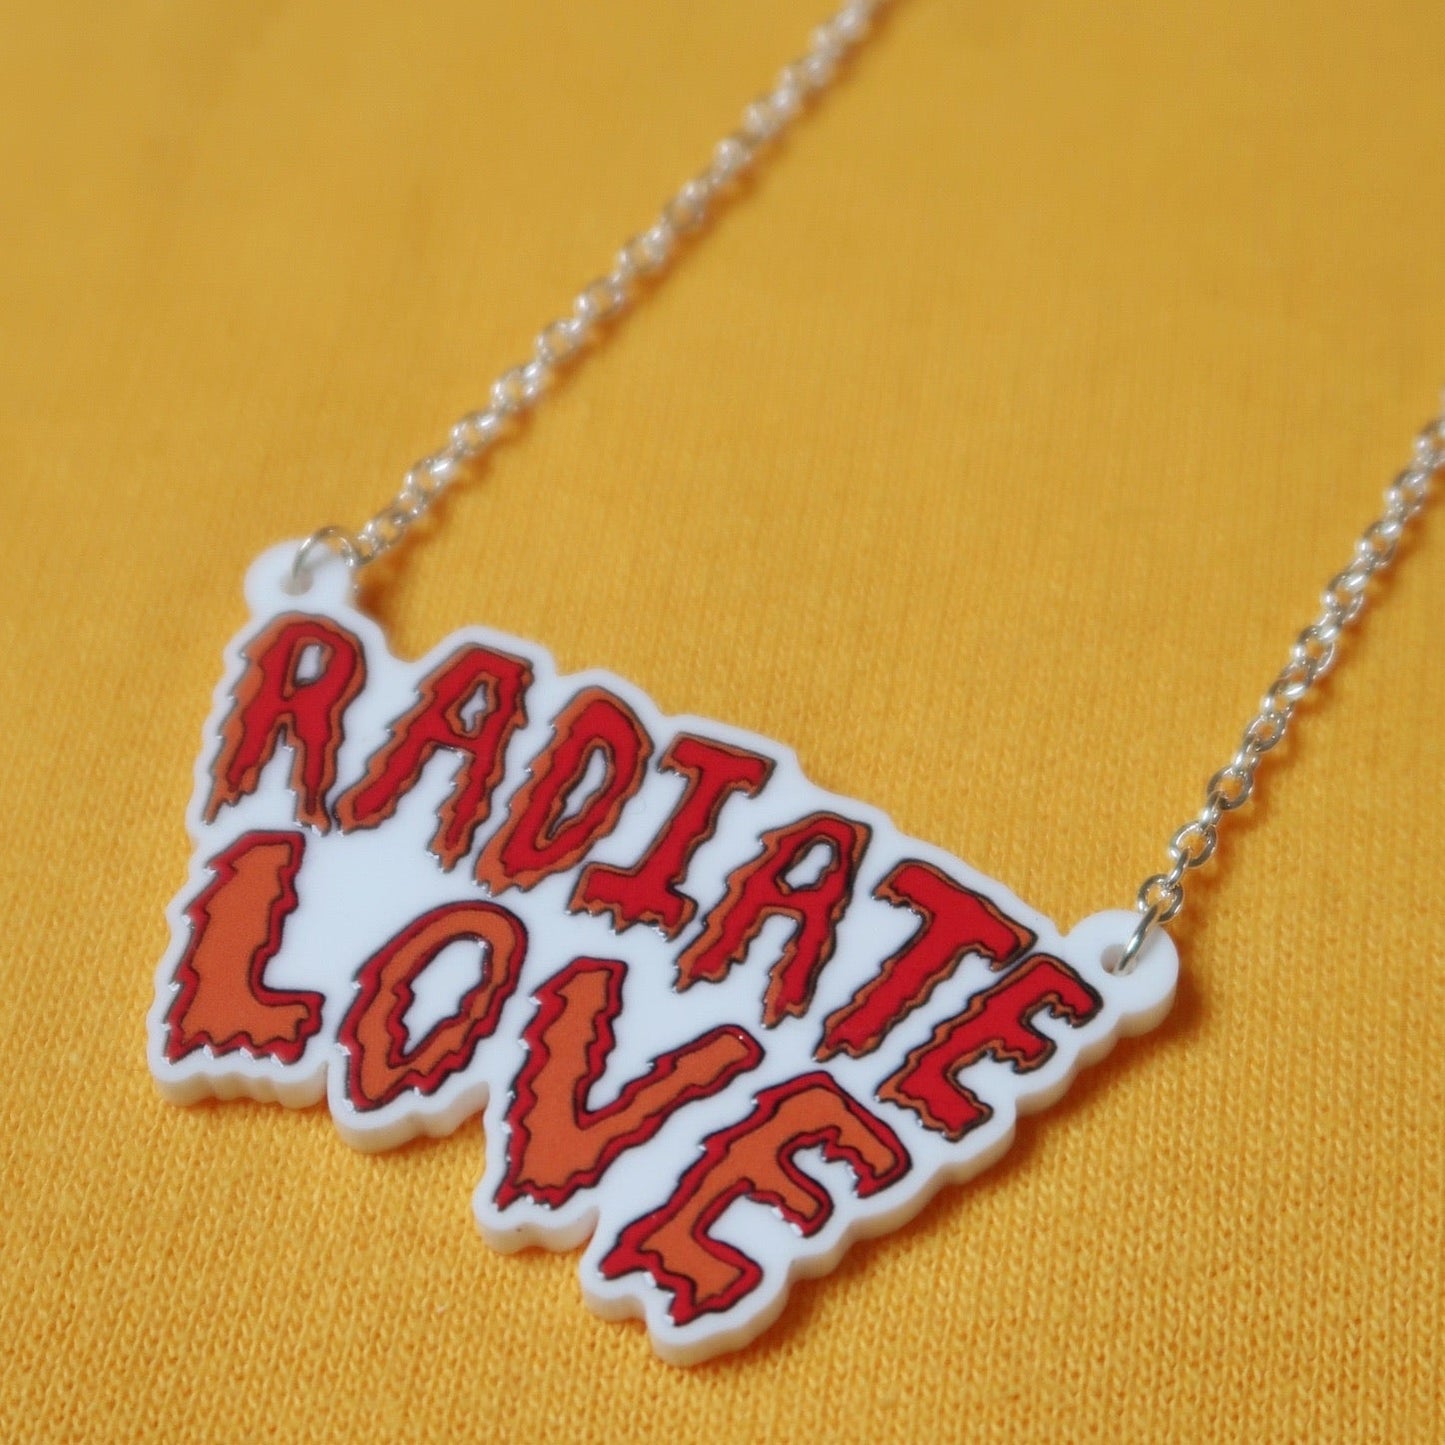 radiate love necklace - silver